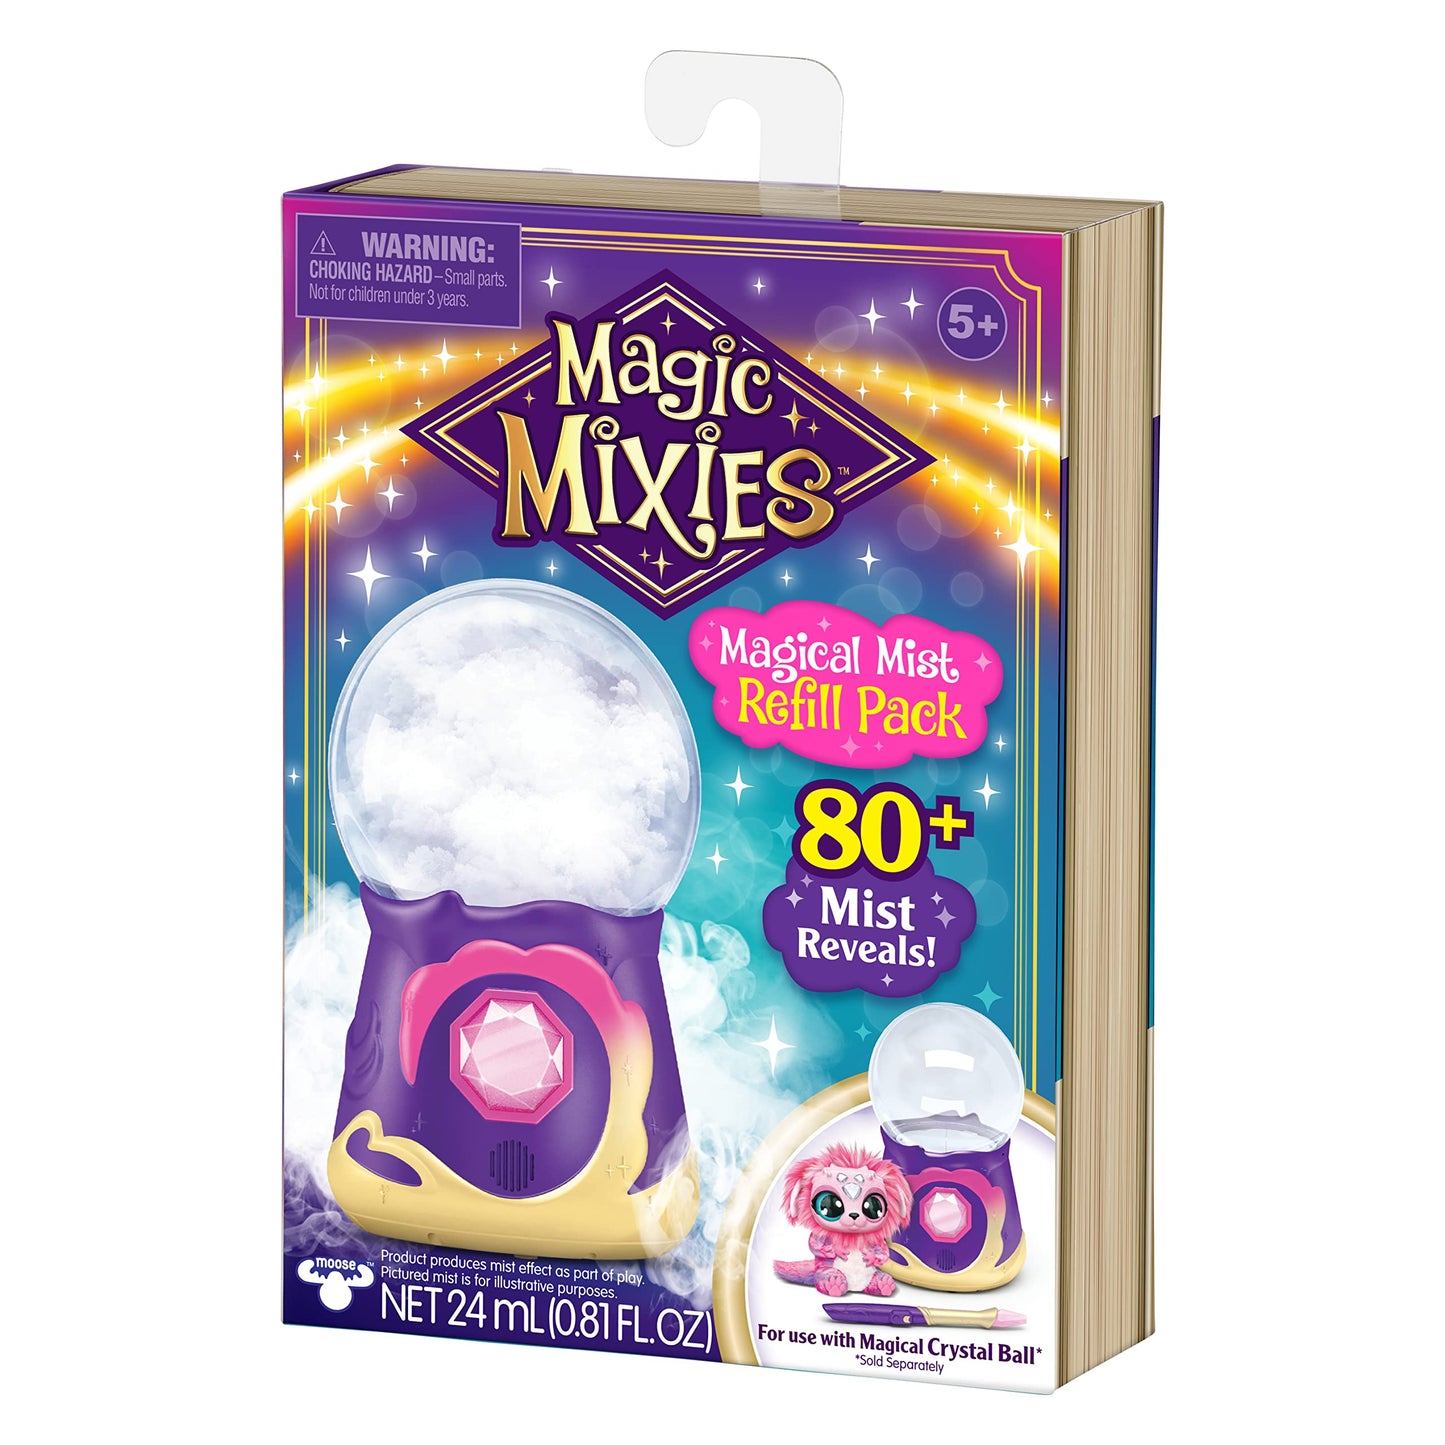 Magic Mixies Magical Mist Purple Refill Pack